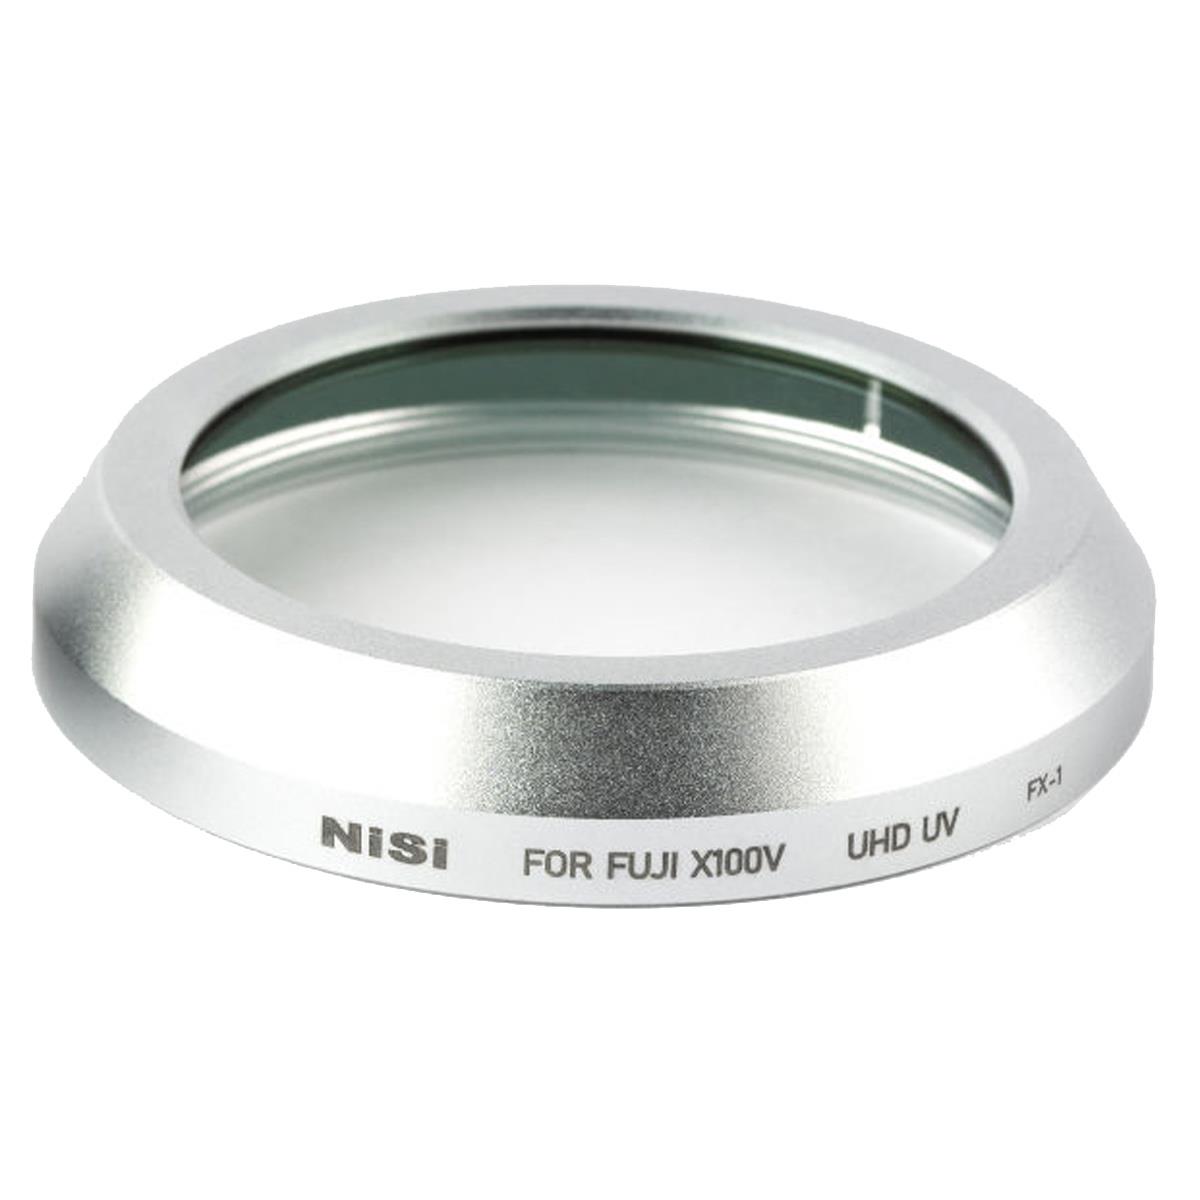 NiSi UHD UV Filter for Select FUJIFILM X100 Series Cameras (Silver)